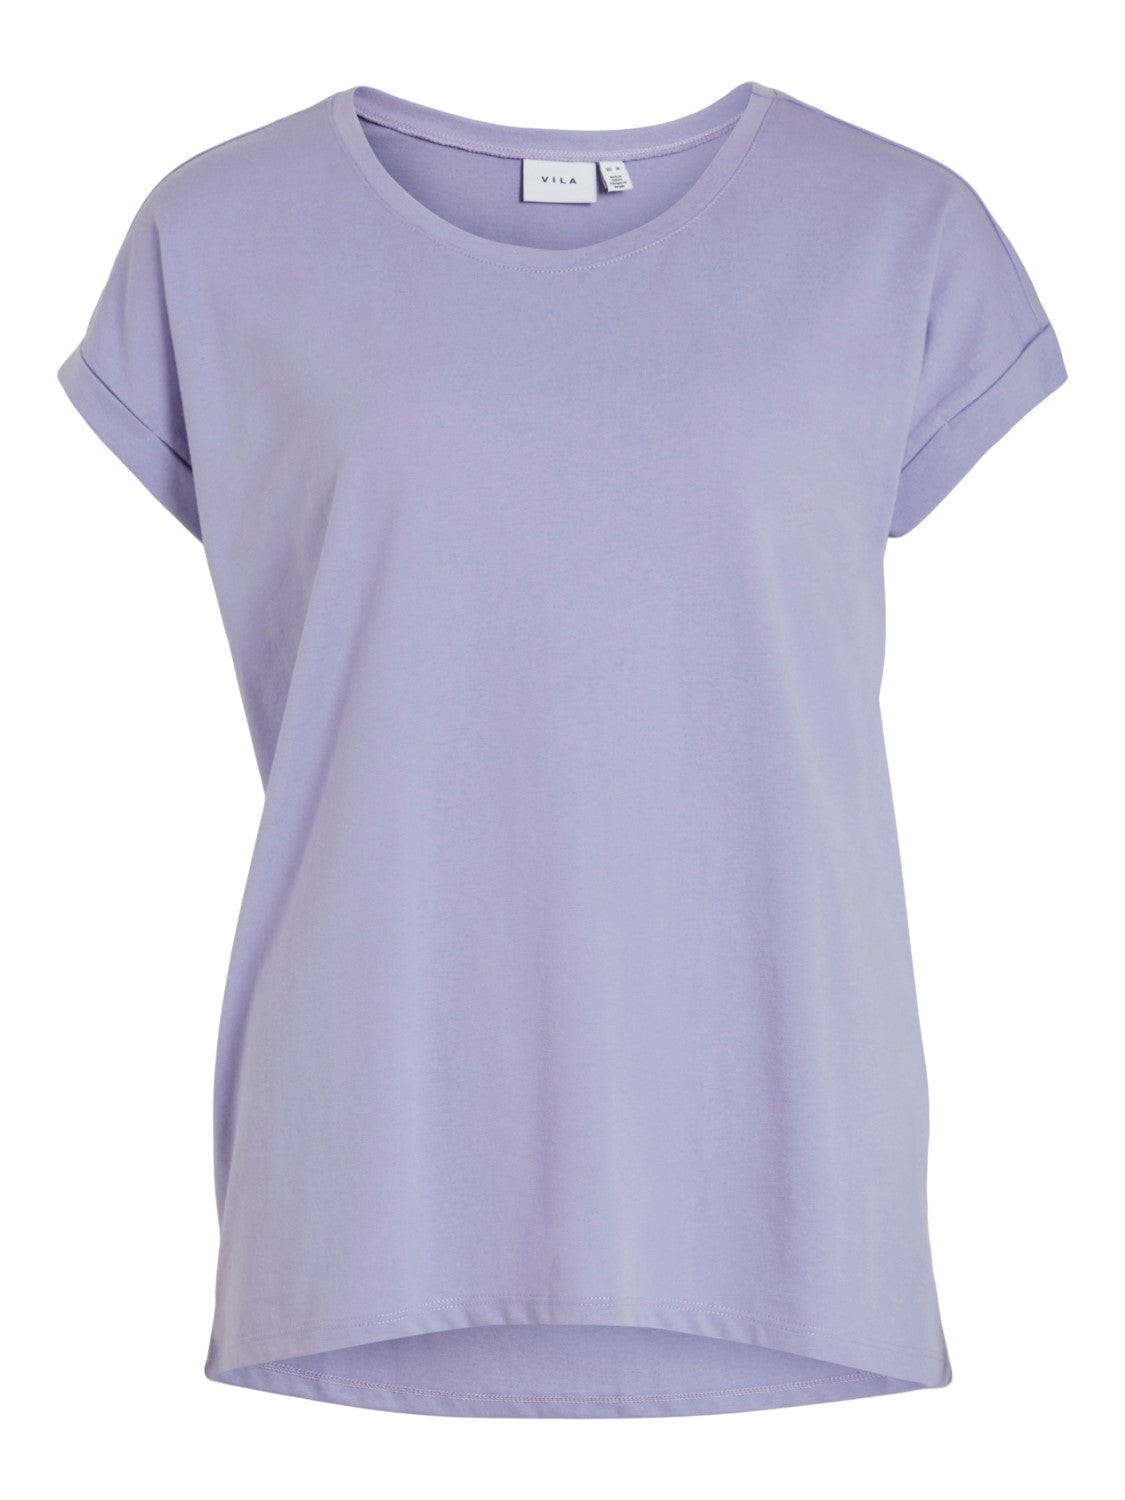 VIDreamers New Pure T-Shirt Sweet Lavender